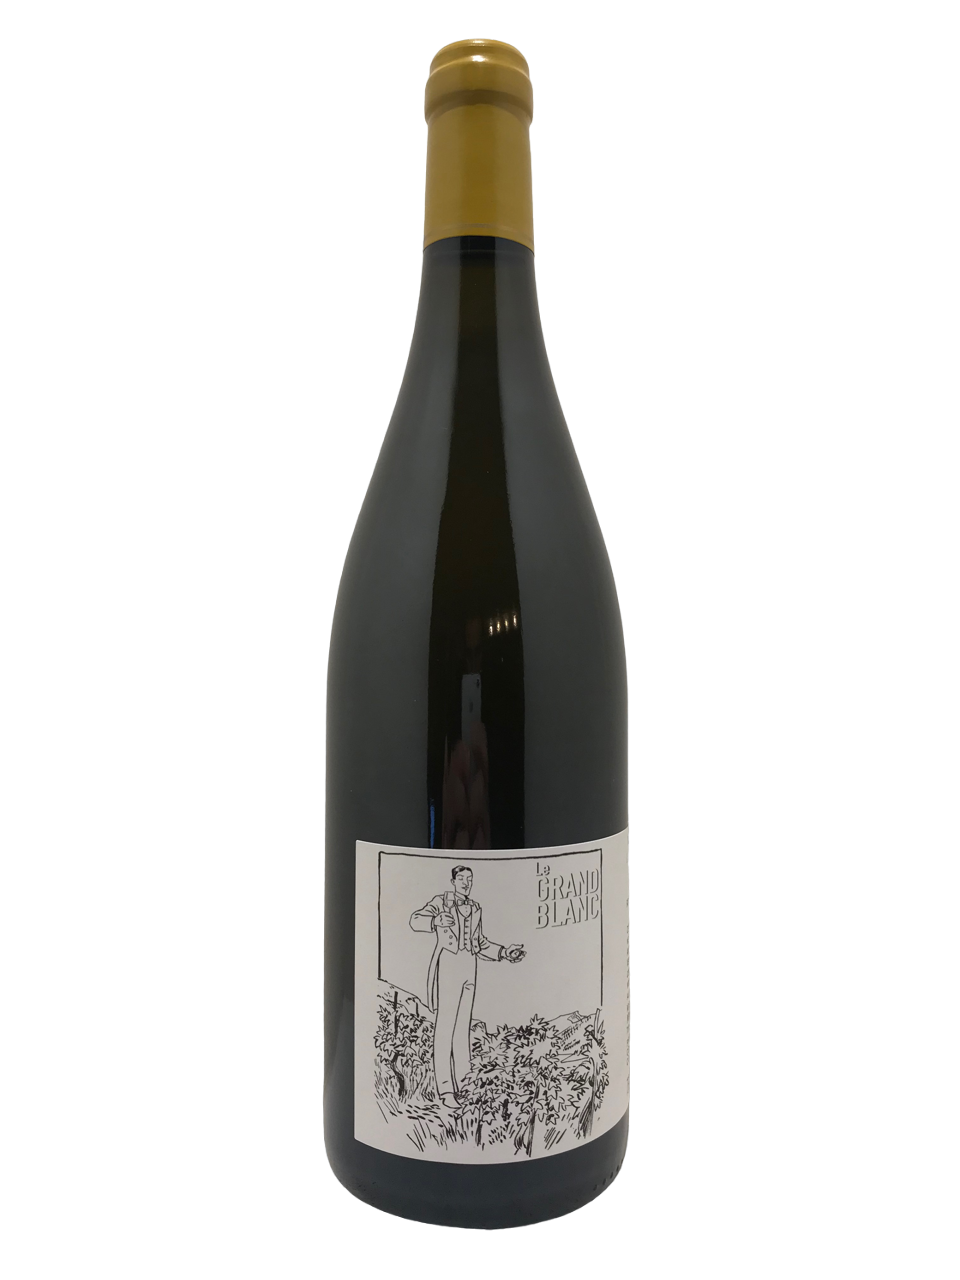 vallée du rhône rhone valley côte rôtie maison stephan organic wine vin biodynamie nature natural vin de france le grand blanc